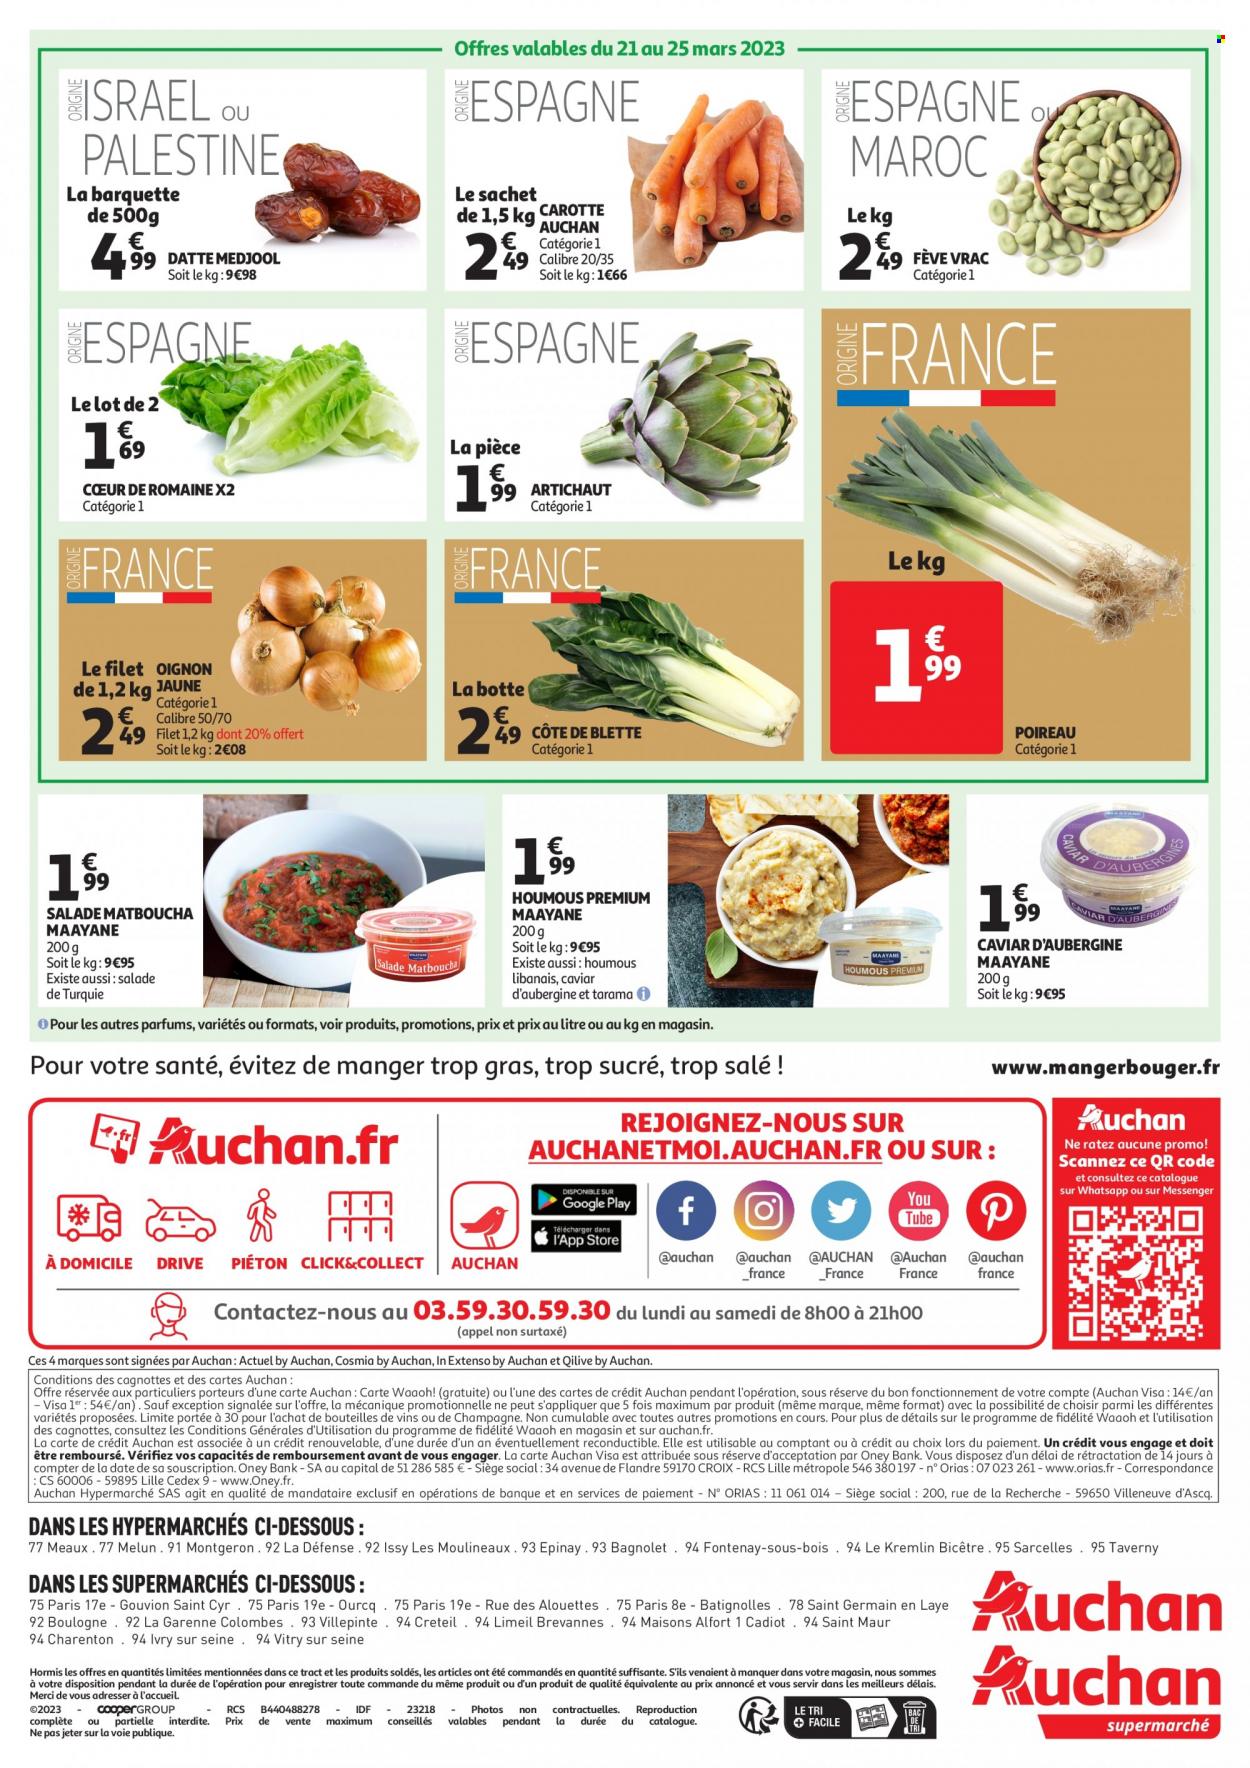 Catalogue Auchan - 21.03.2023 - 04.04.2023. 